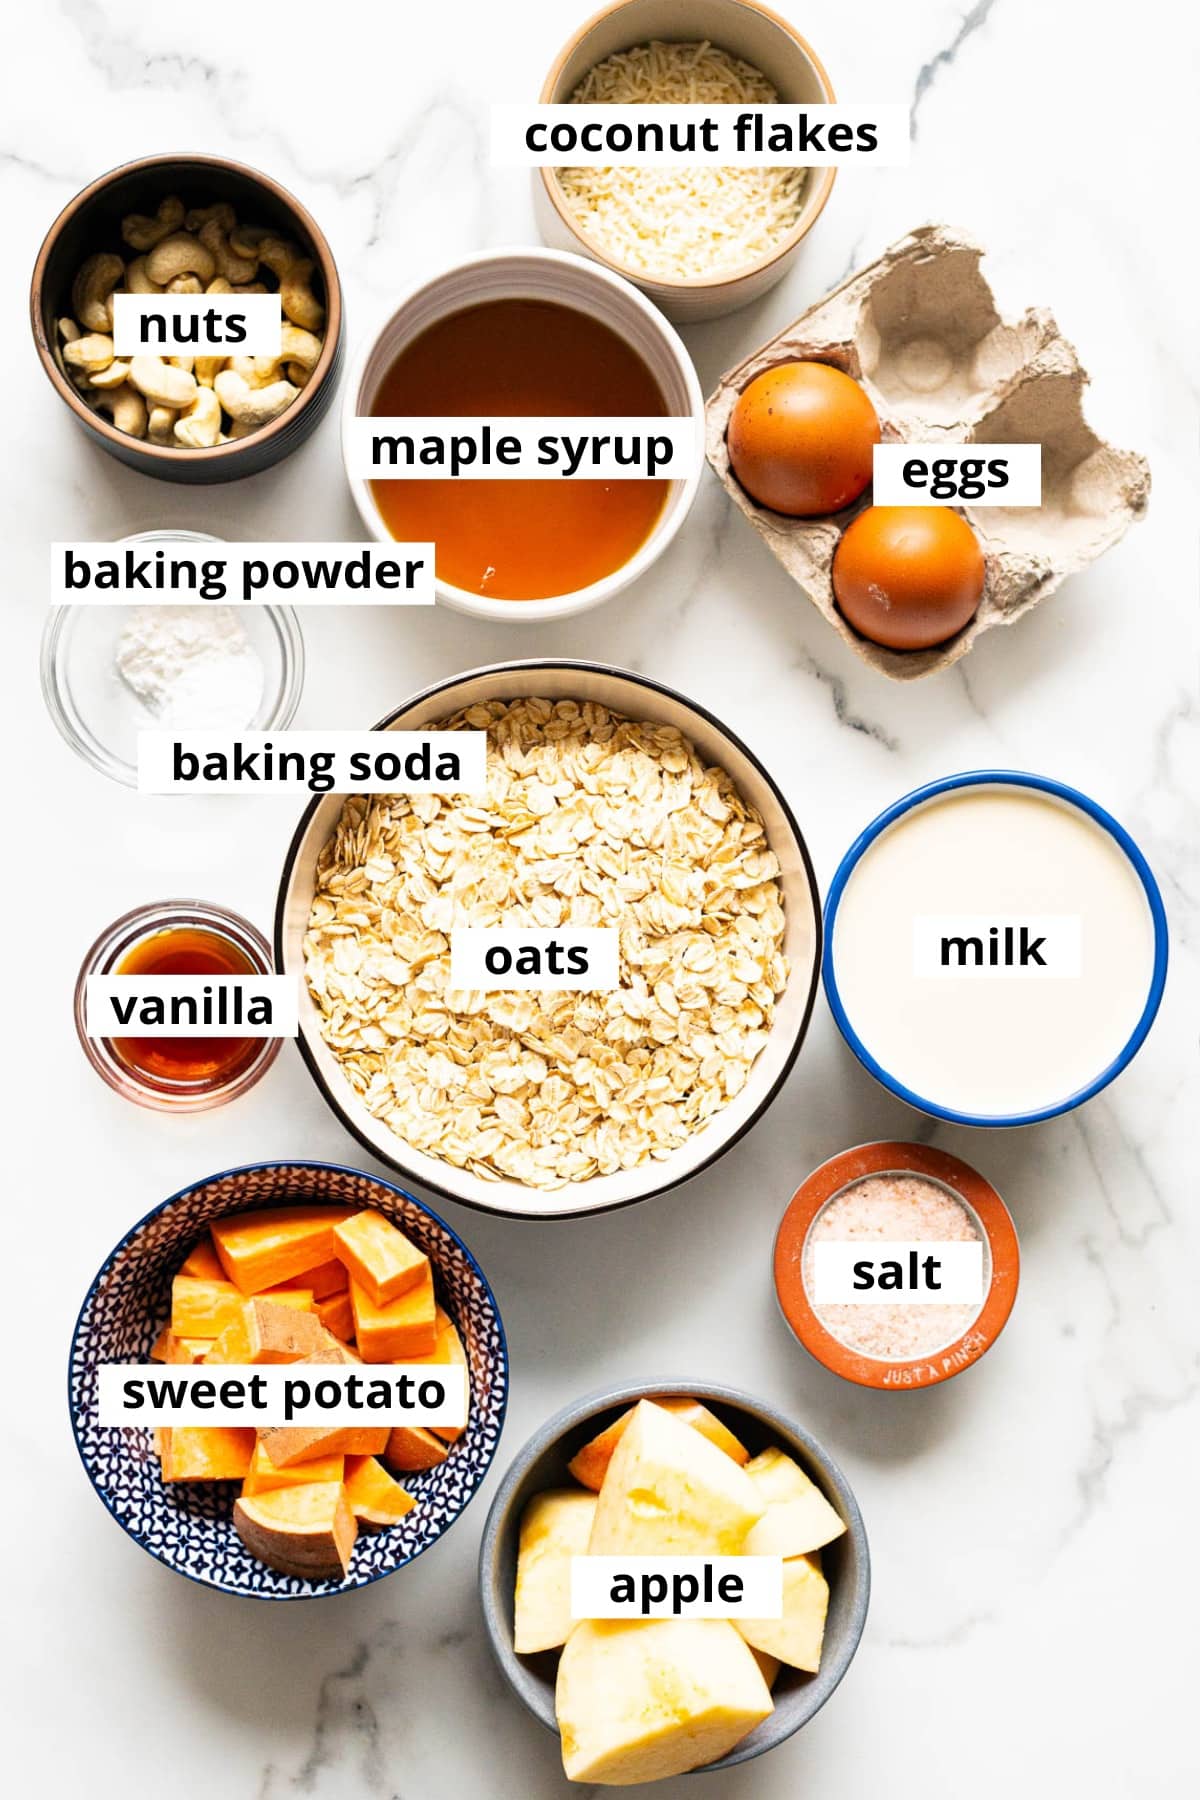 Oats, sweet potato, apple, milk, vanilla, salt, eggs, baking powder, baking soda, cashews, coconut flakes, maple syrup.